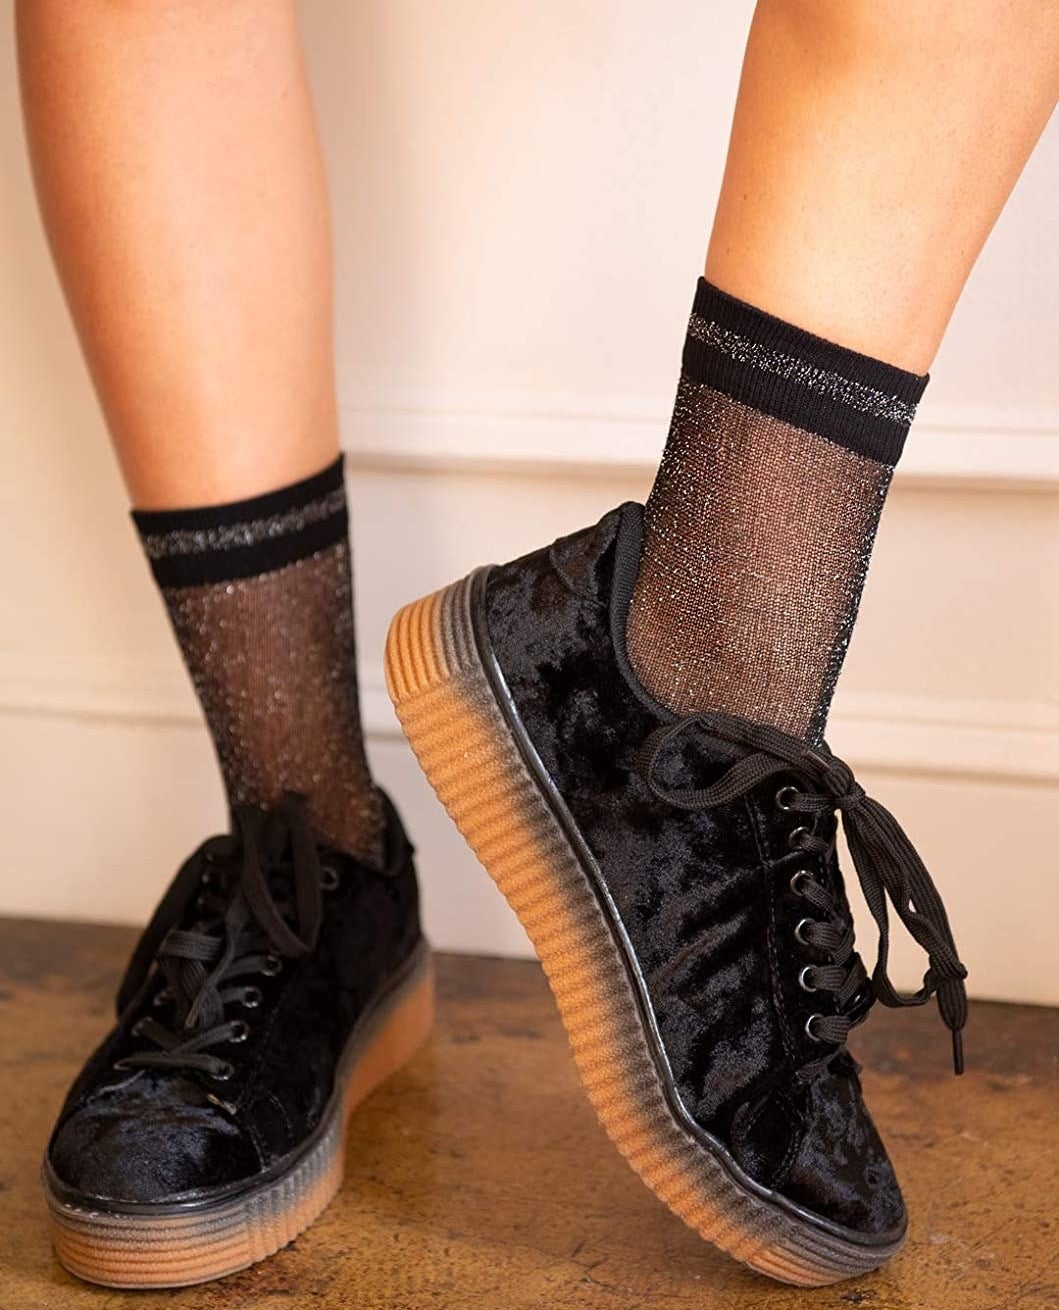 model wearing the black glittery socks with black sneakers 